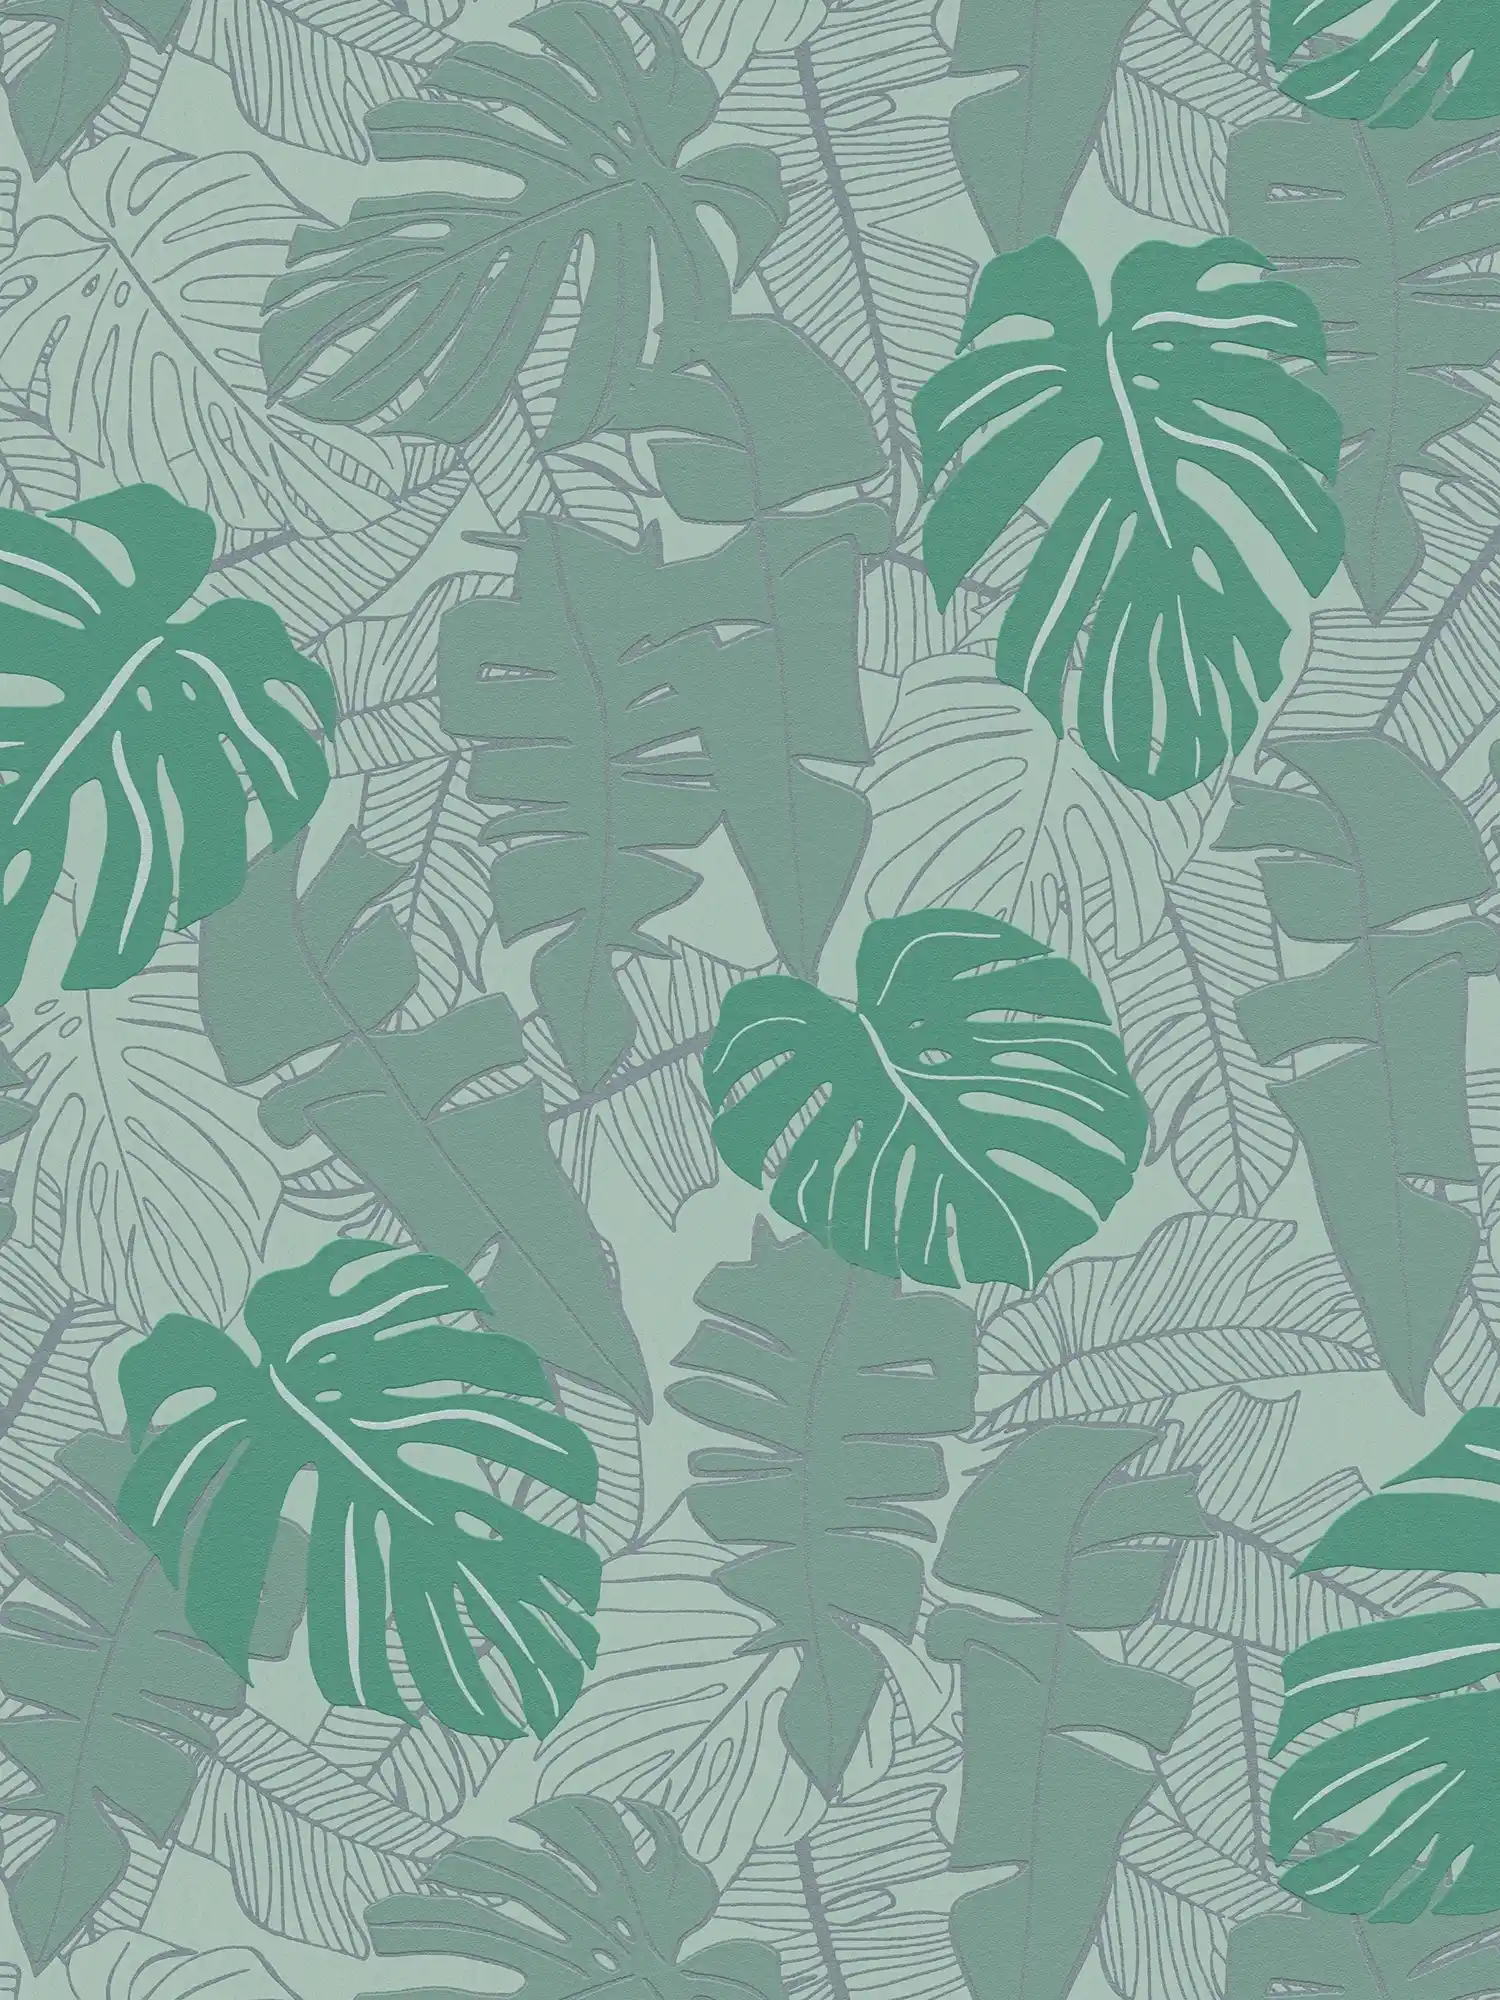 Jungle wallpaper with shiny pattern - green, metallic
